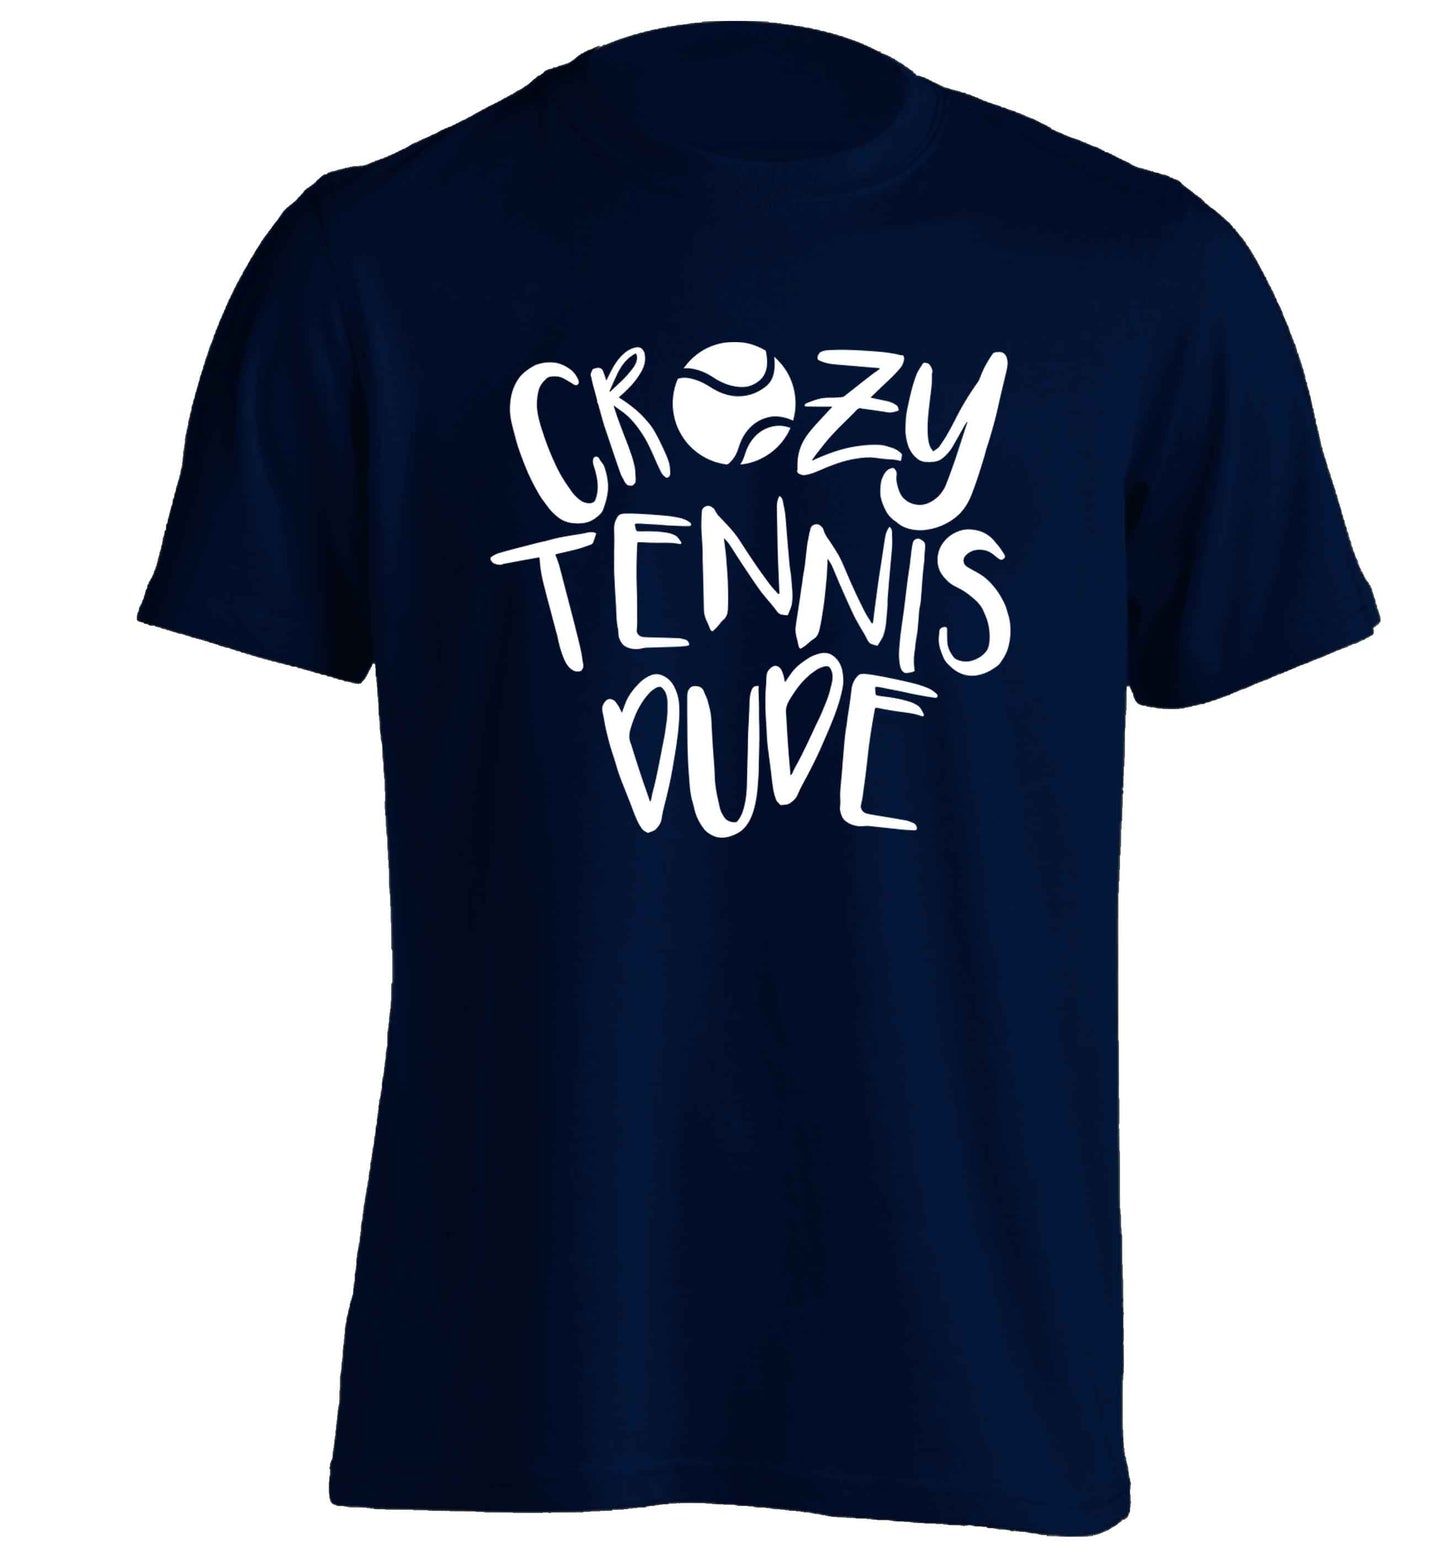 Crazy tennis dude adults unisex navy Tshirt 2XL